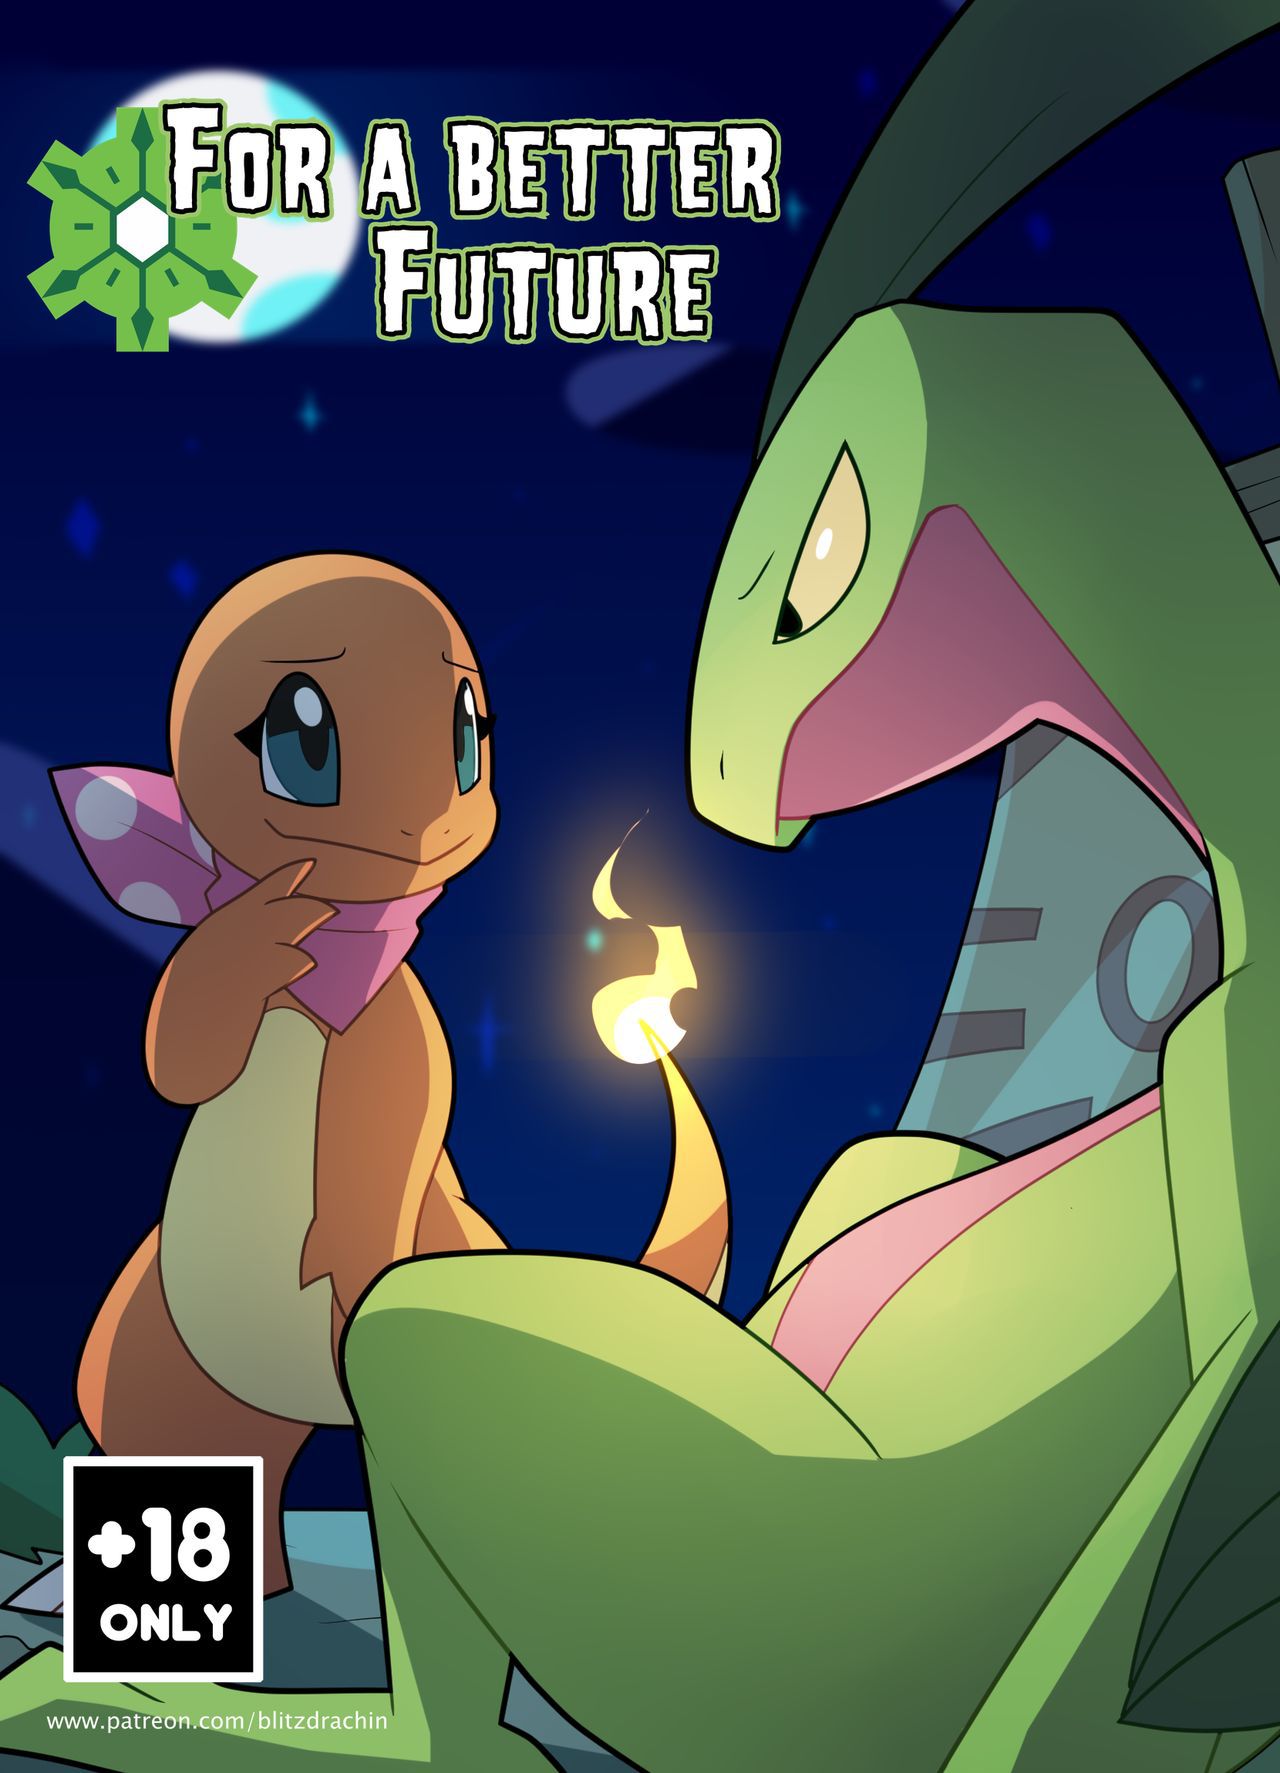 [Blitzdrachin] For A Better Future (Pokémon) 1